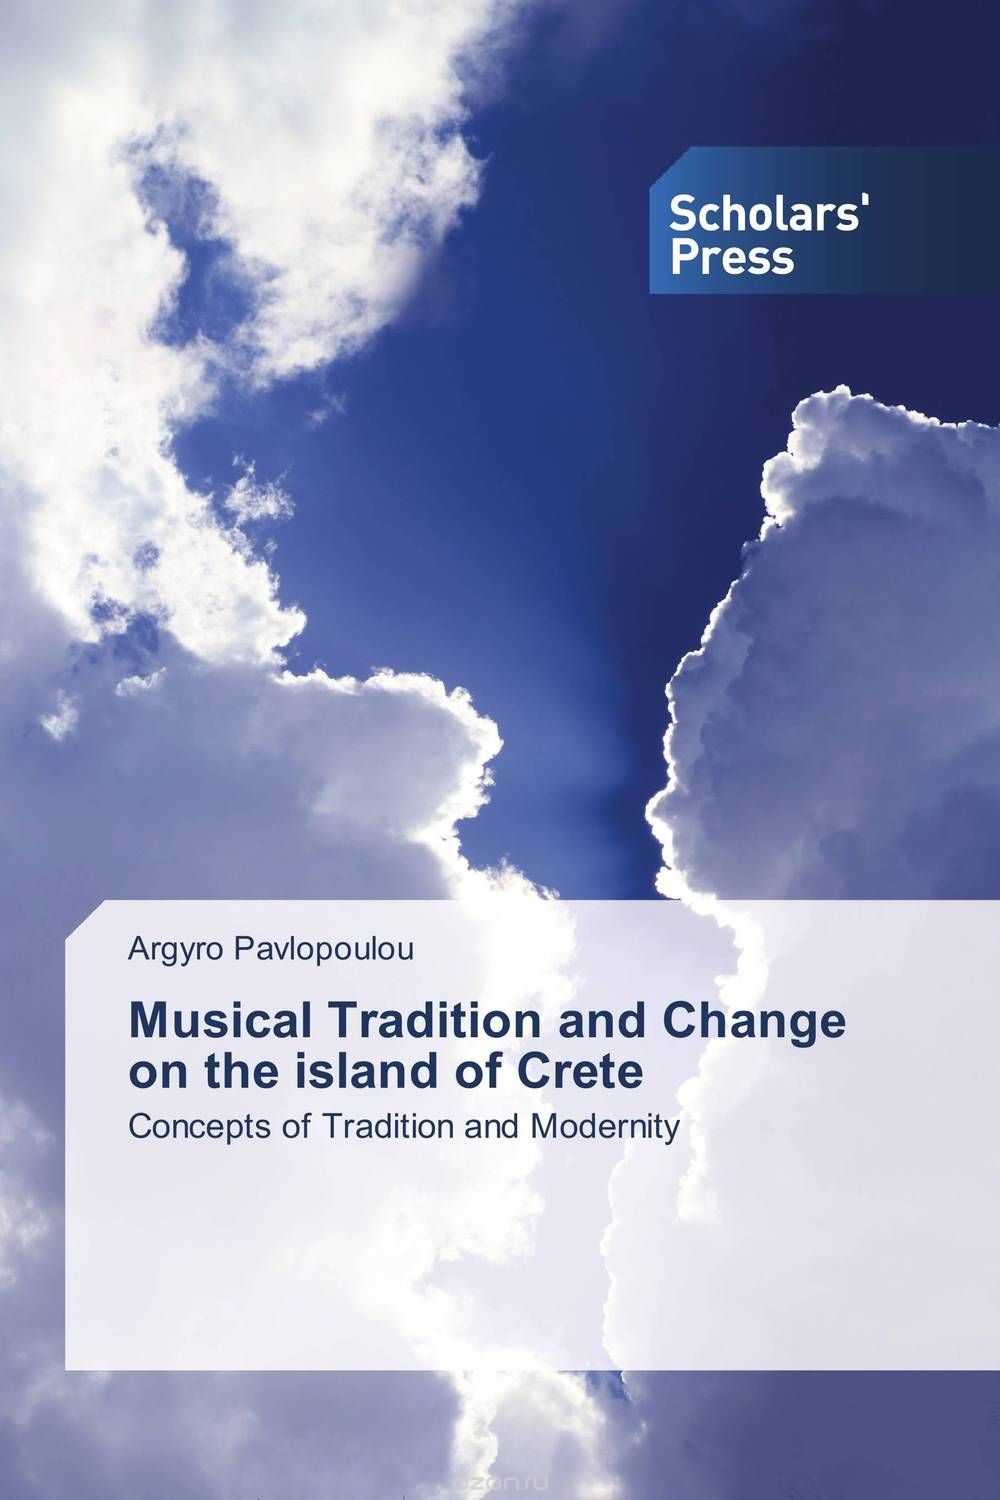 Скачать книгу "Musical Tradition and Change on the island of Crete"